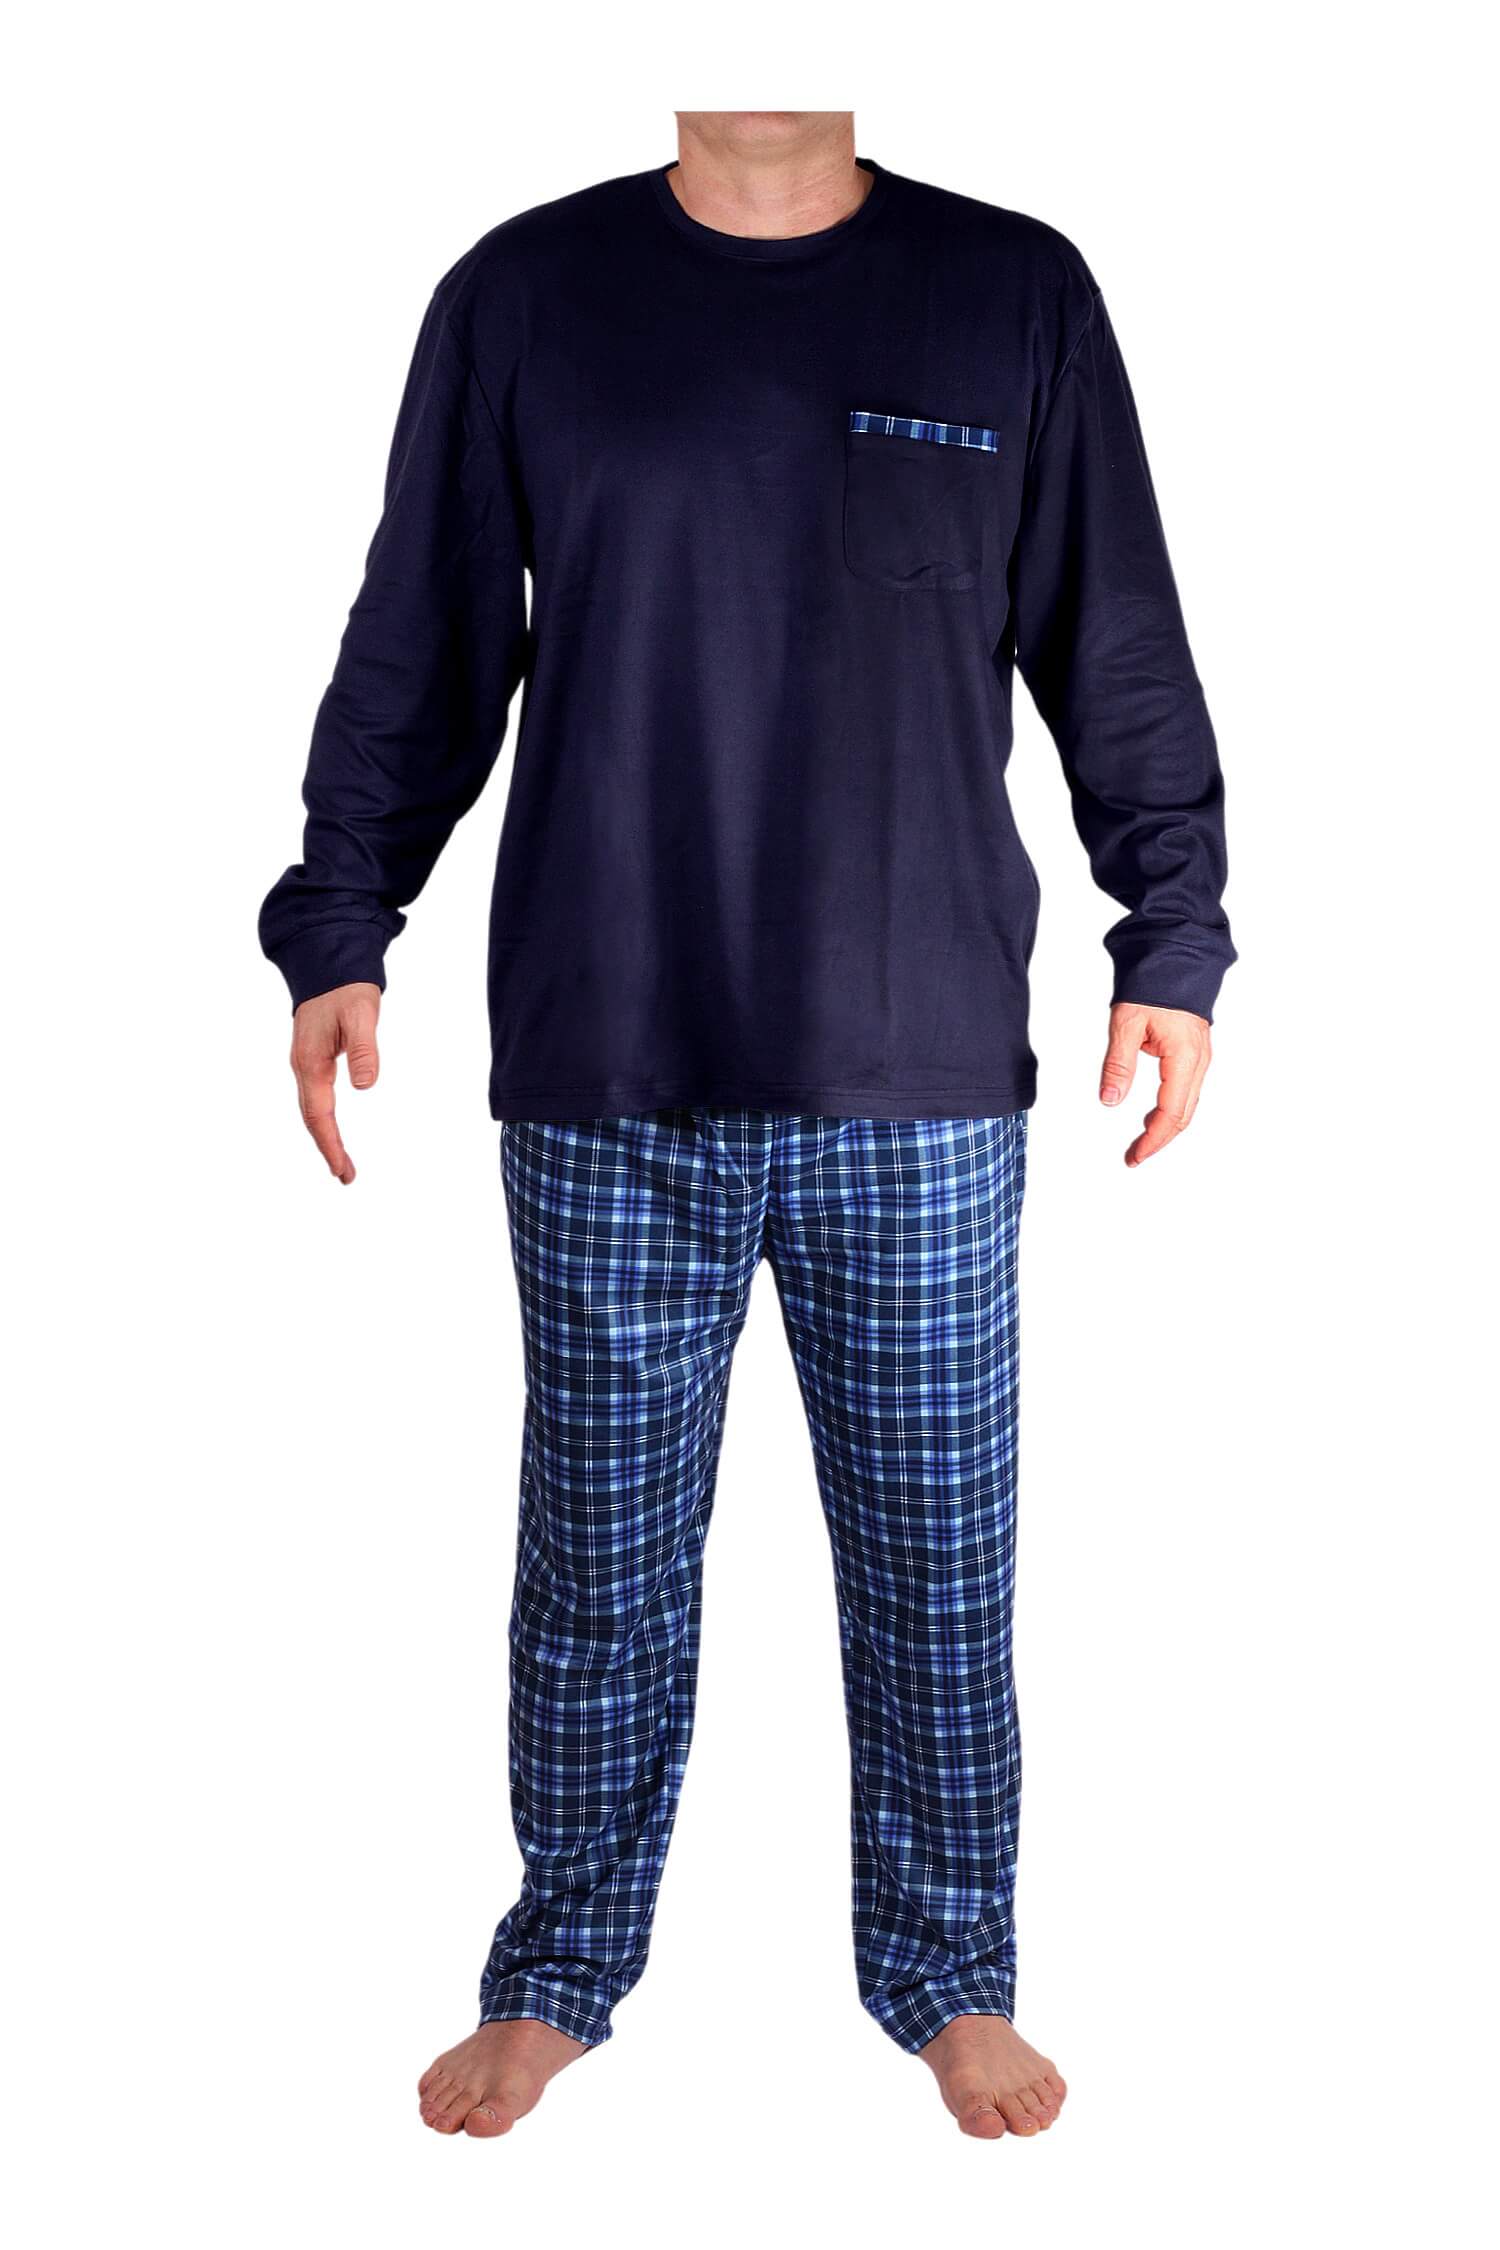 Zdenda Lux pánské pyžamo s flísem tmavě modrá 4XL